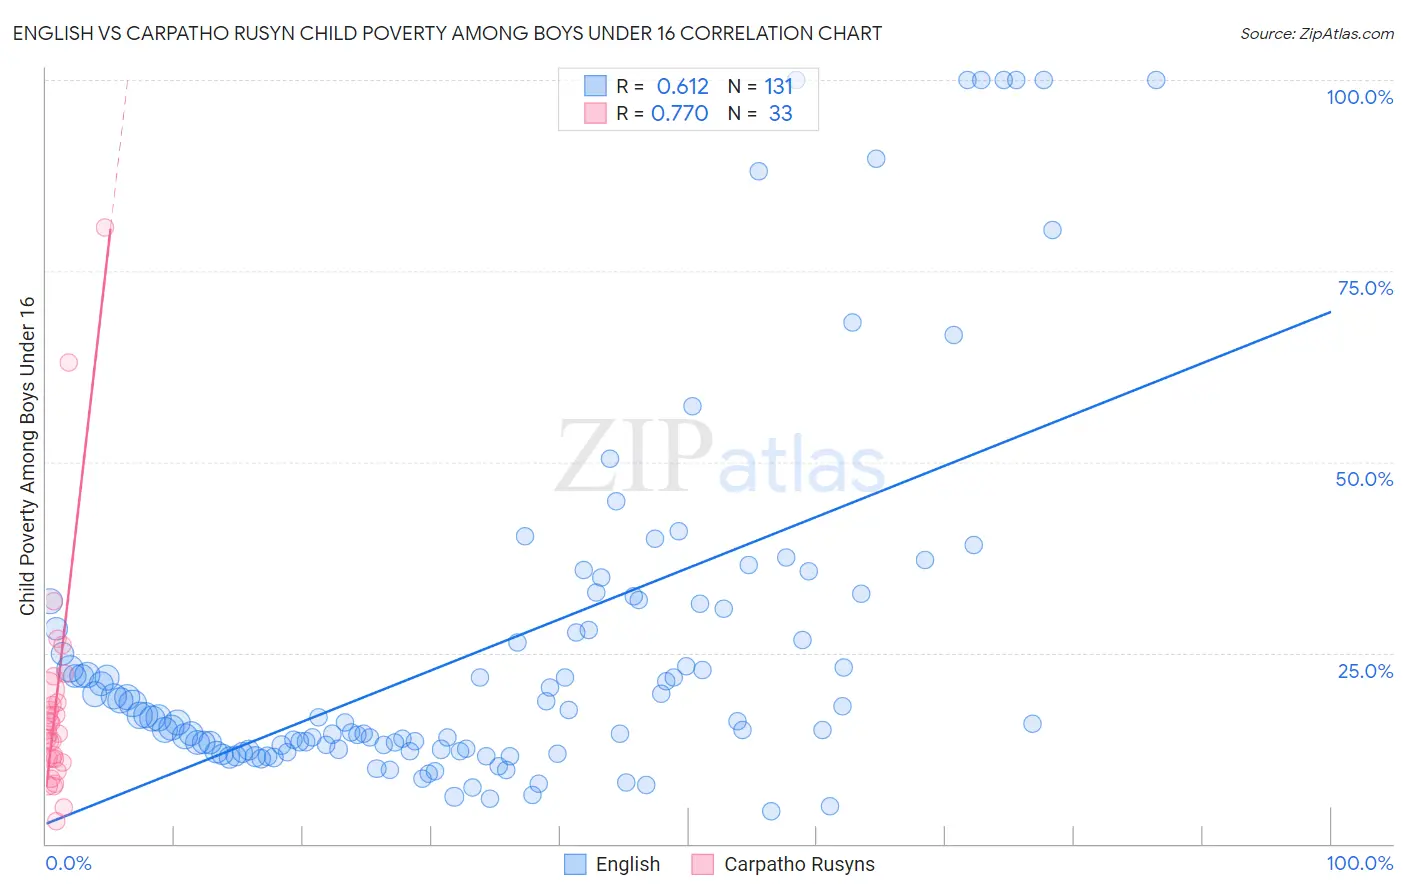 English vs Carpatho Rusyn Child Poverty Among Boys Under 16